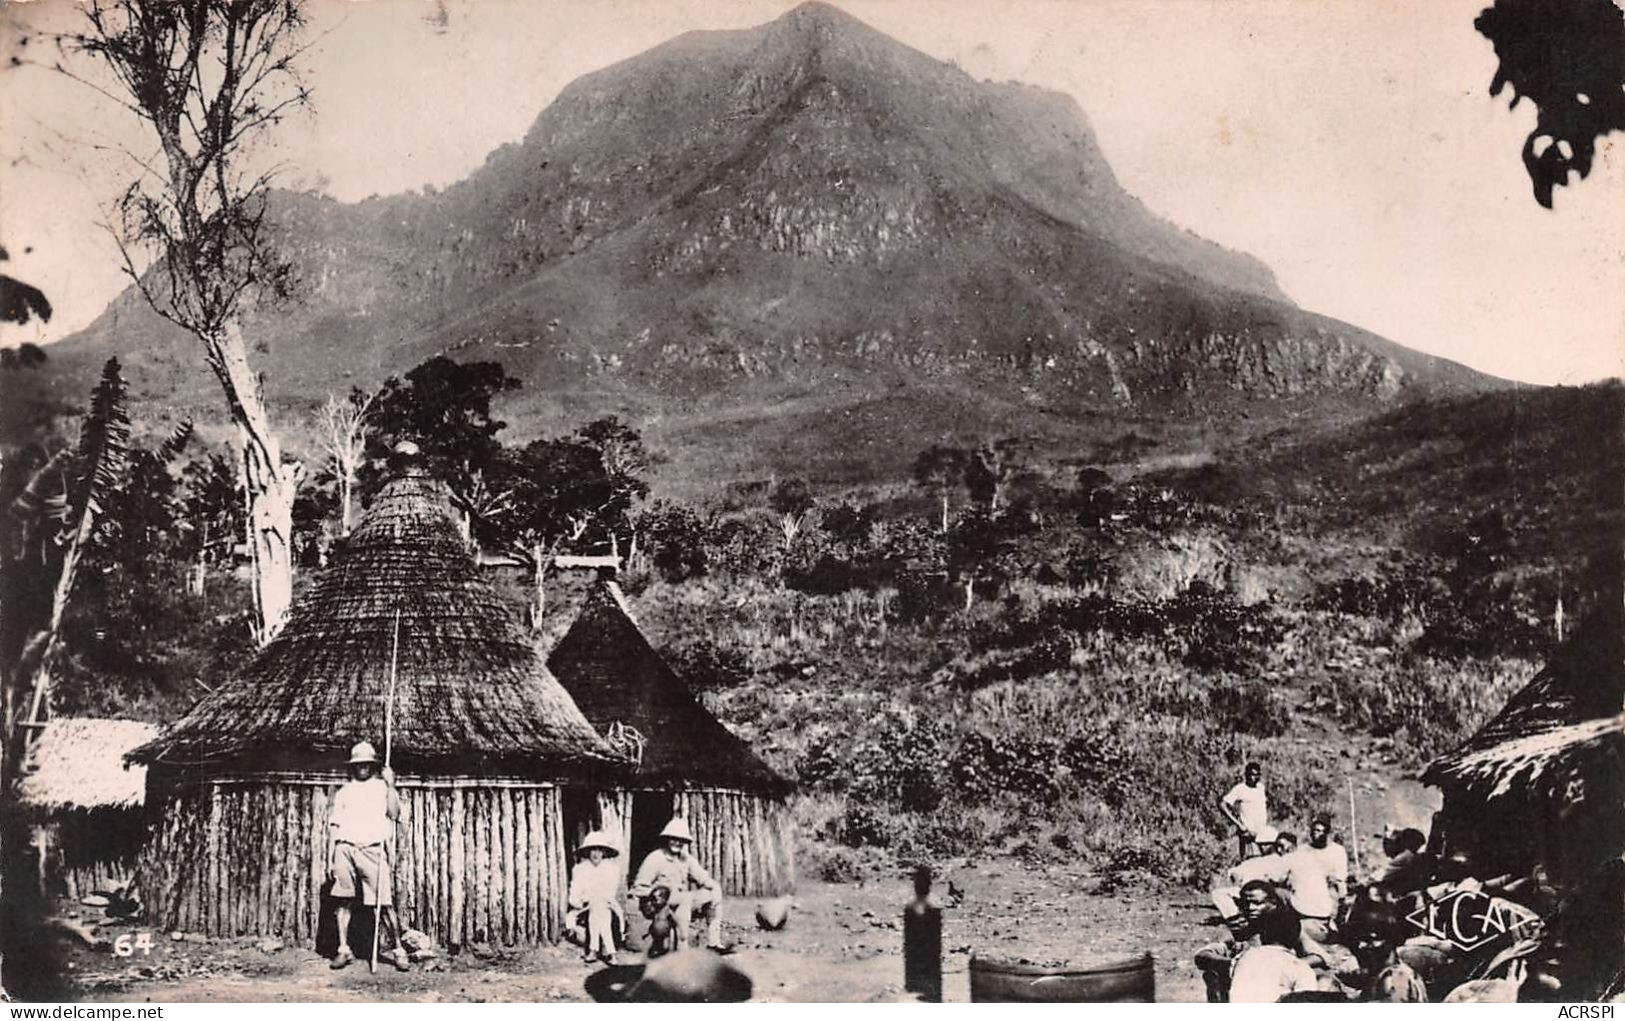 CAMEROUN  Circonscription De N'Kongsamba Montagne De Nenou   (Scan R/V) N°   7   \QQ1110Ter - Cameroon